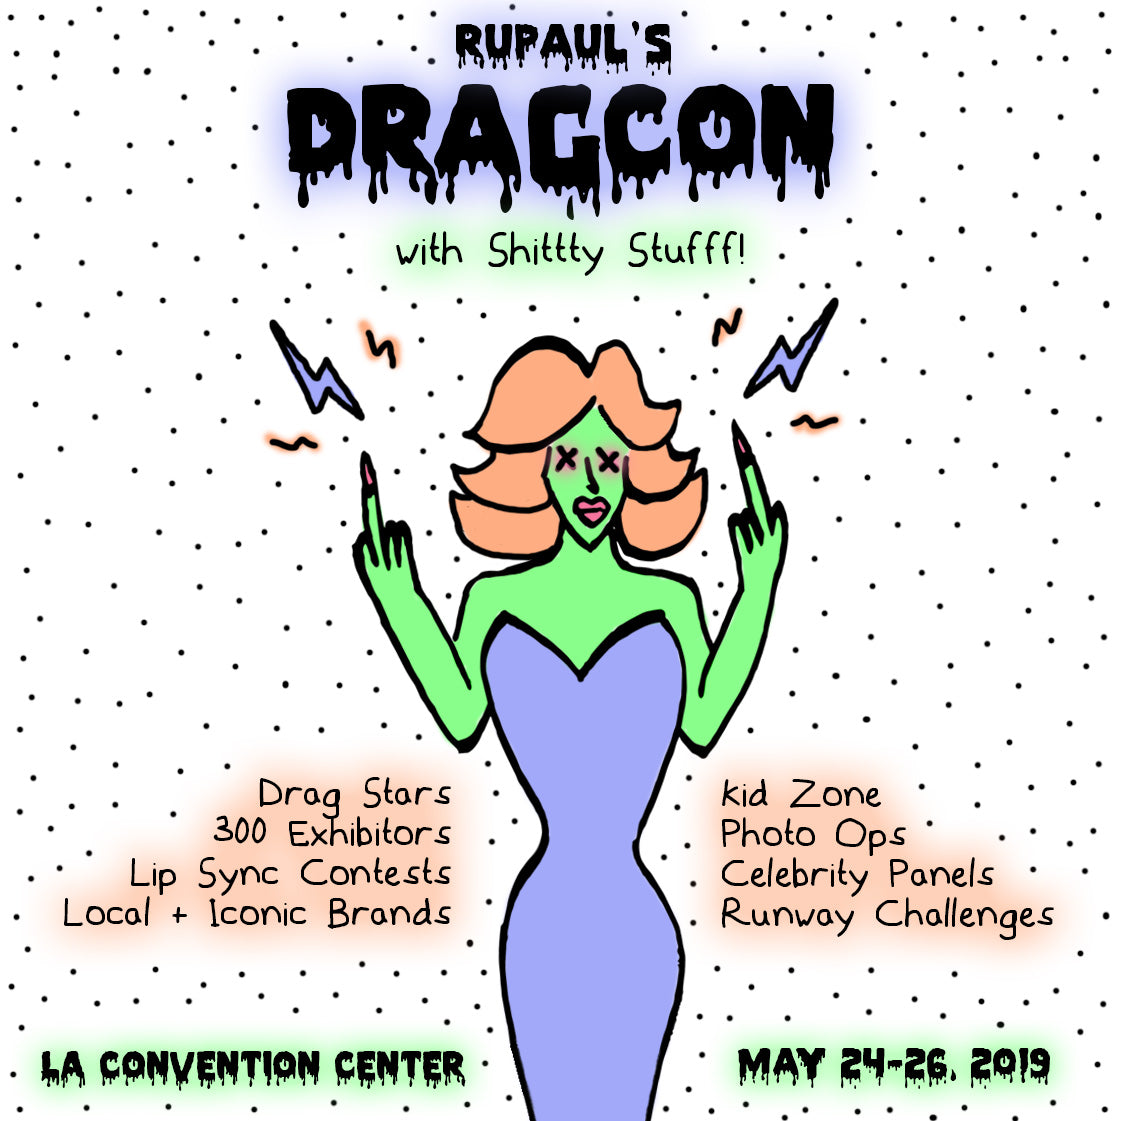 MAY 24-26, 2019 // RUPAUL'S DRAGCON